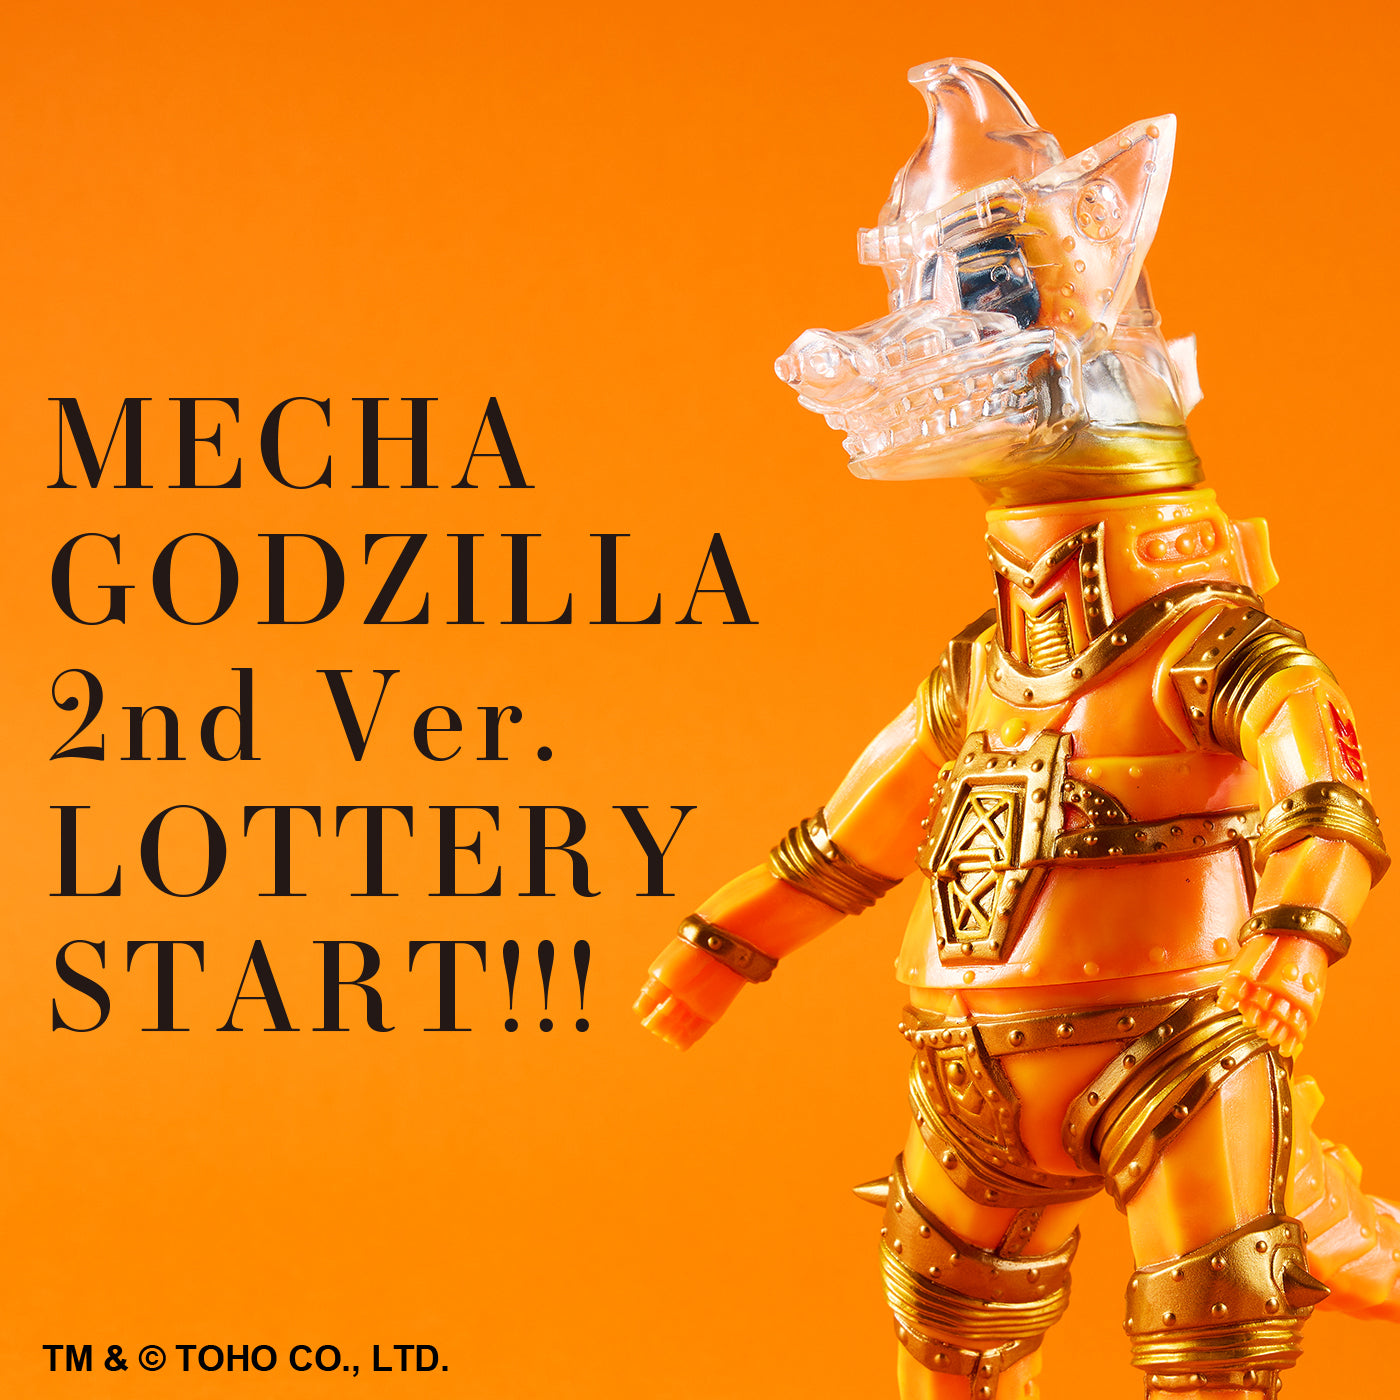 Mecha Godzilla Designed by SwimmyDesignLab 2nd ver.